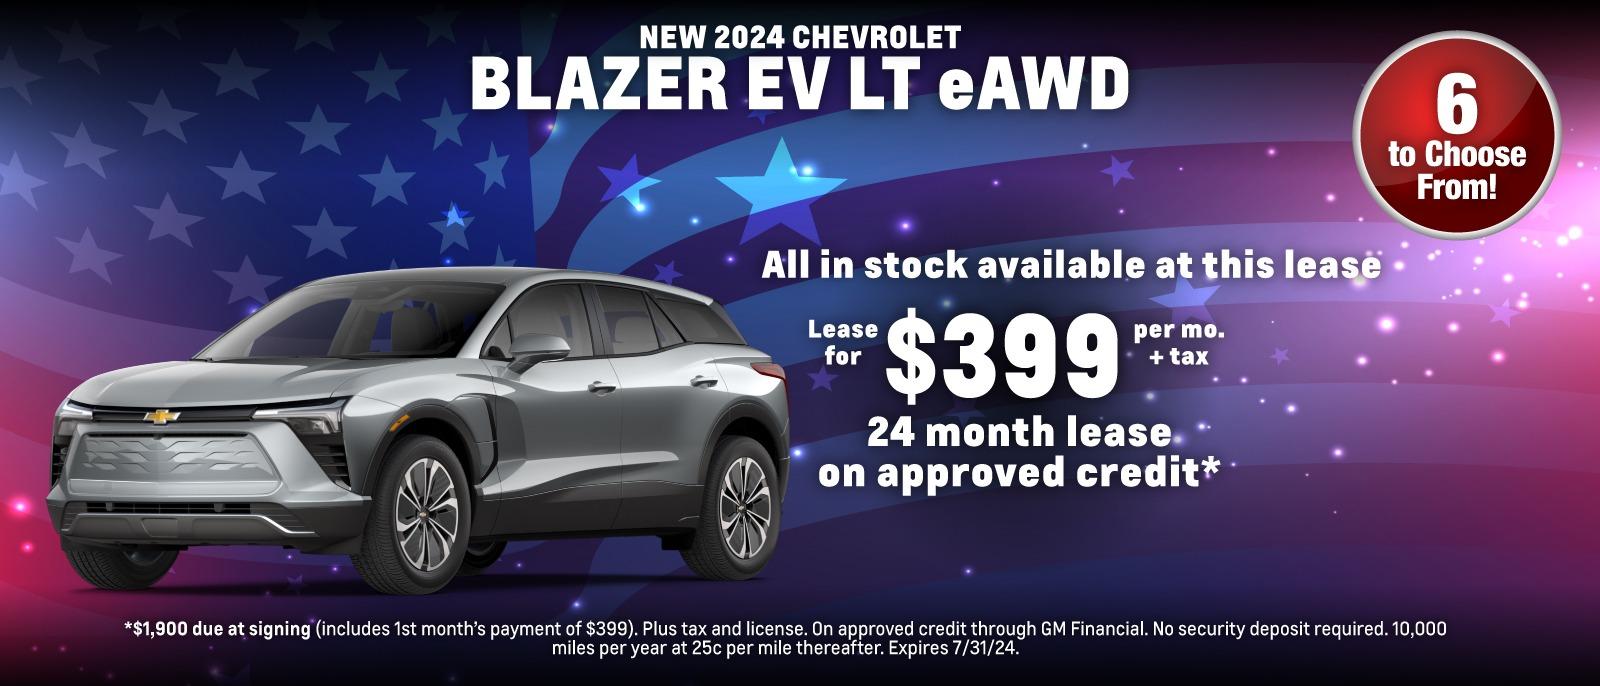 new 2024 Chevy Blazer EV LT eAWD - lease $399/month